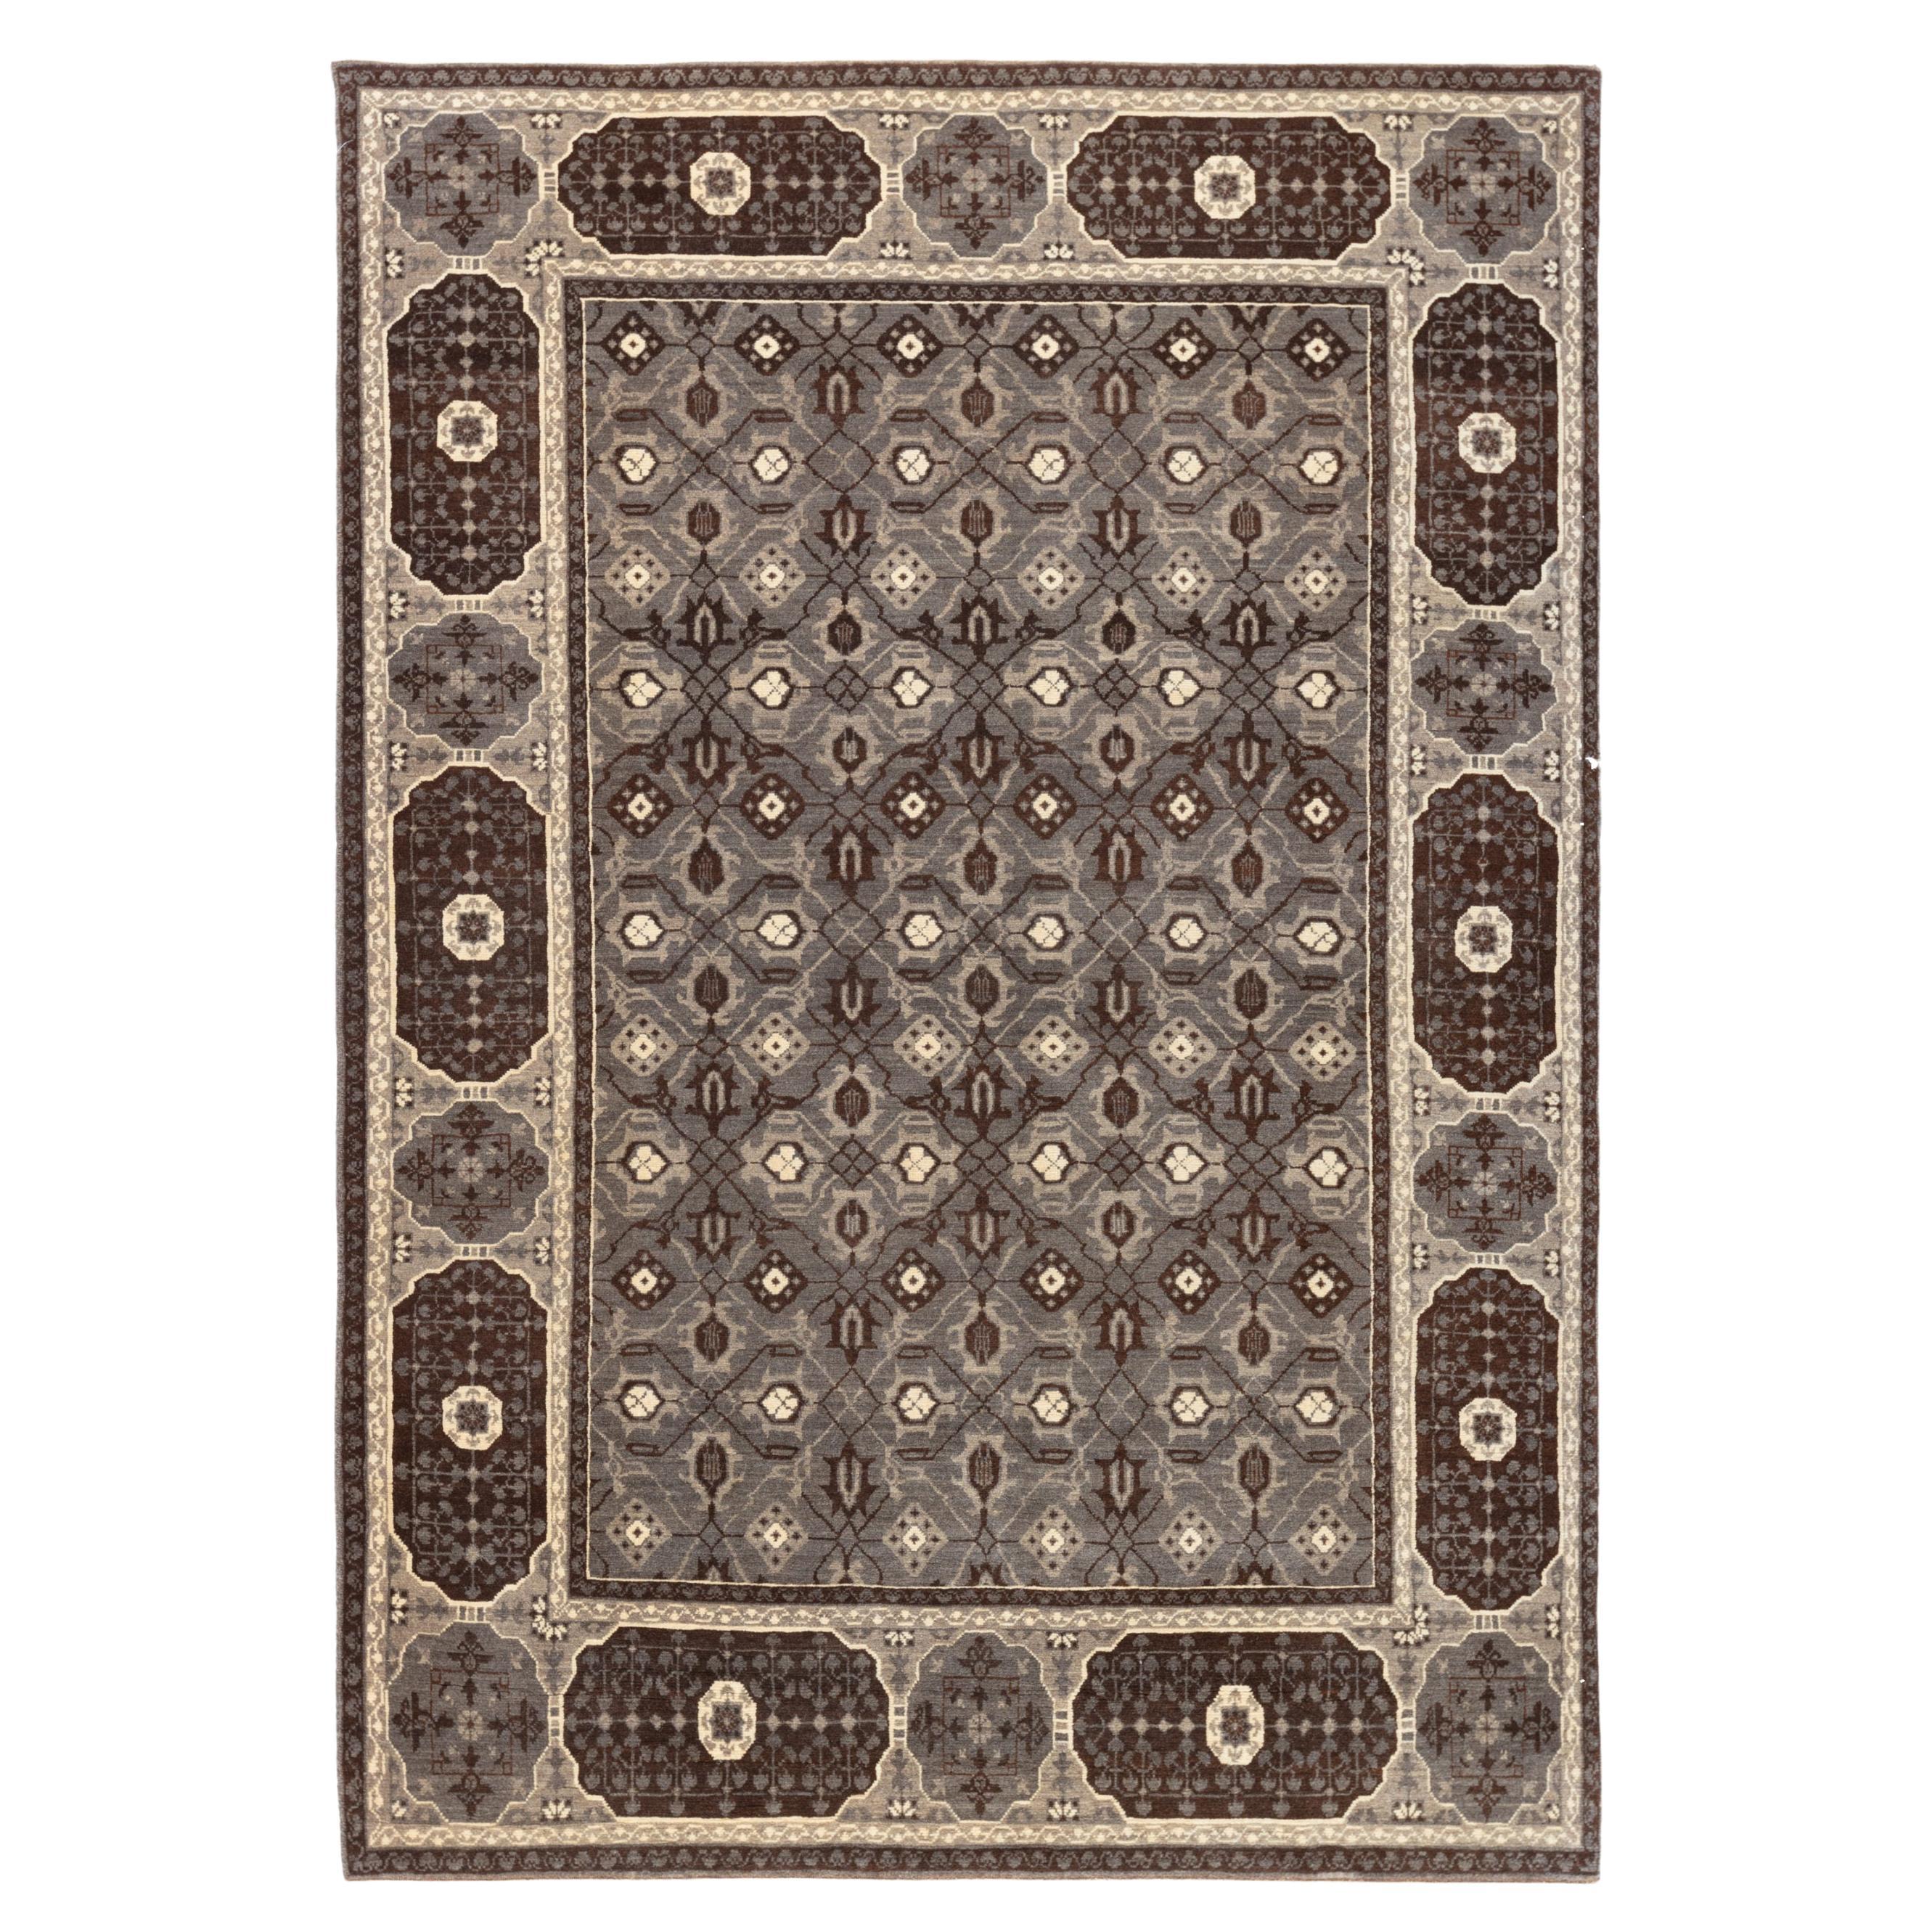 Ararat Rugs Mamluk Carpet with Lattice Design, Natural Sheep Wool Colors No Dye For Sale